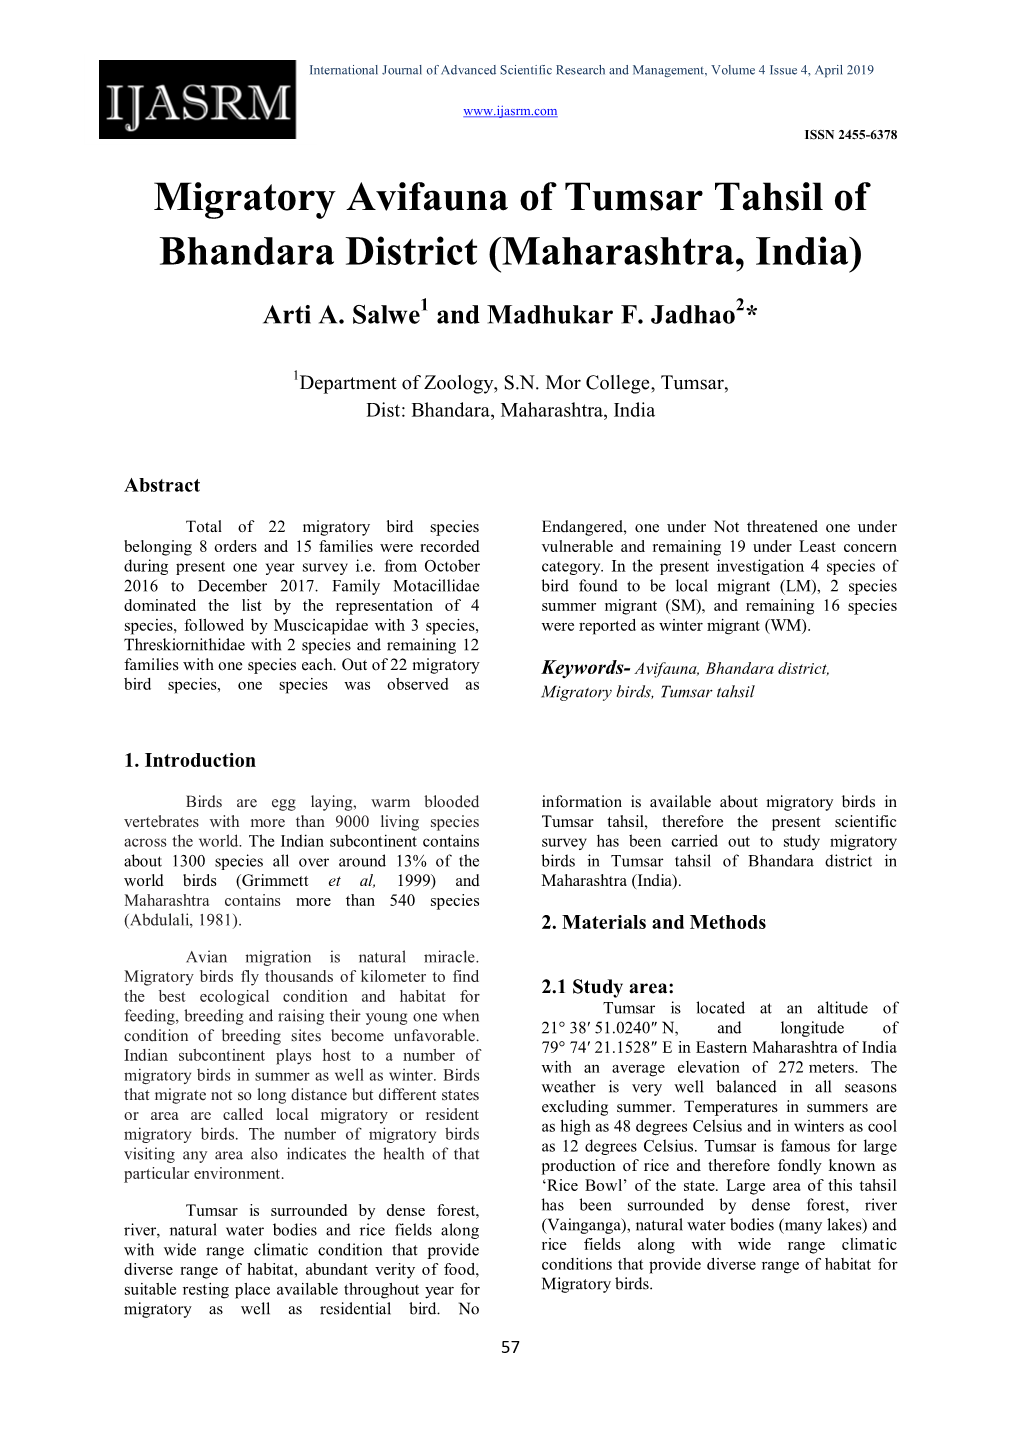 Migratory Avifauna of Tumsar Tahsil of Bhandara District (Maharashtra, India)